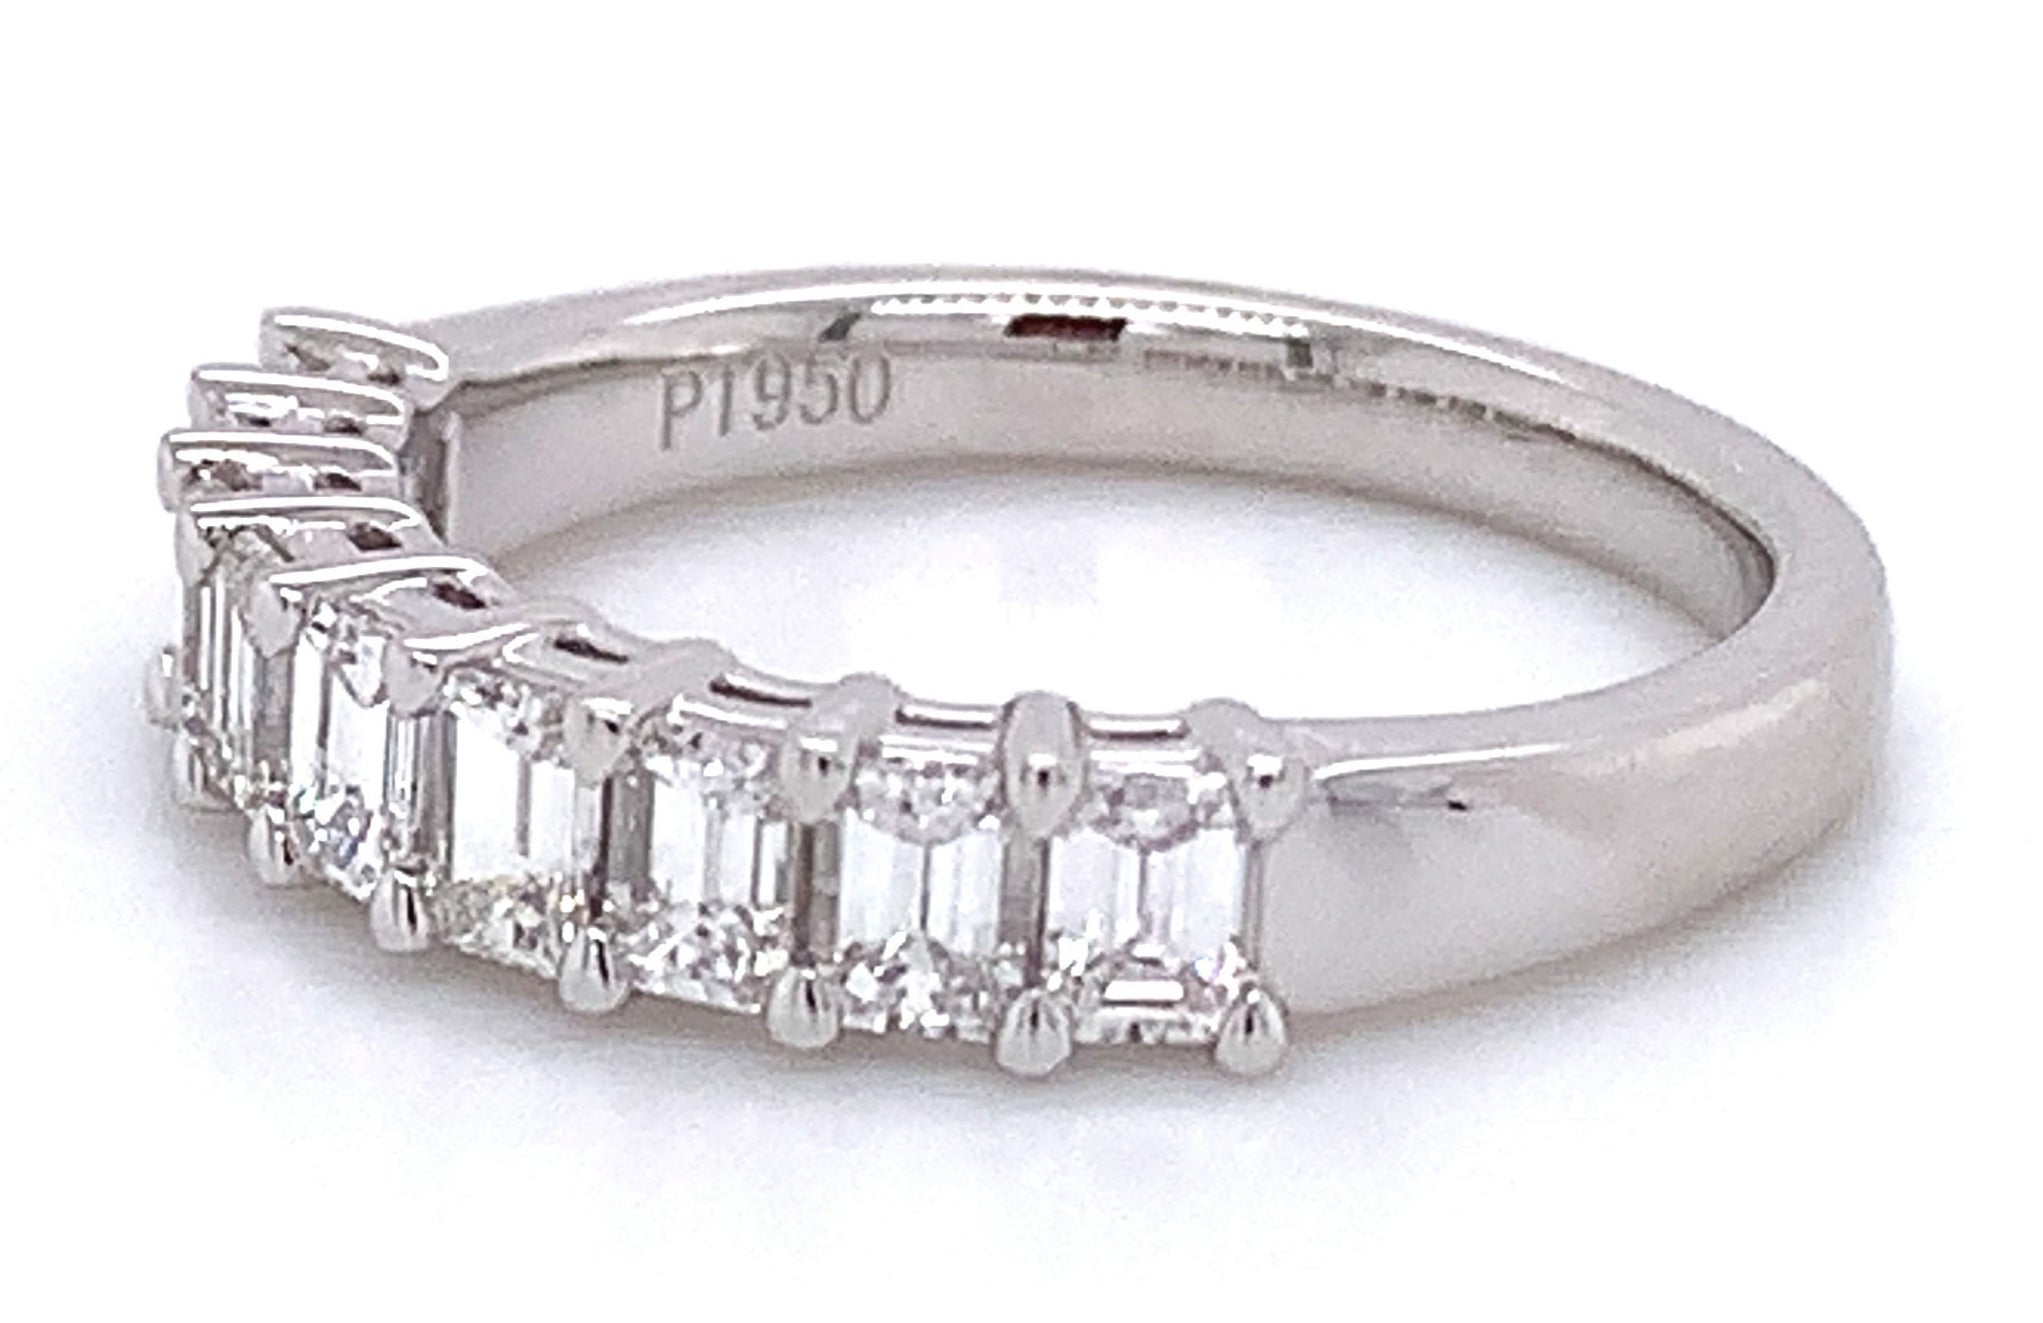 Ladies Diamond 0.94ctw Emerald Cut Eternity Ring